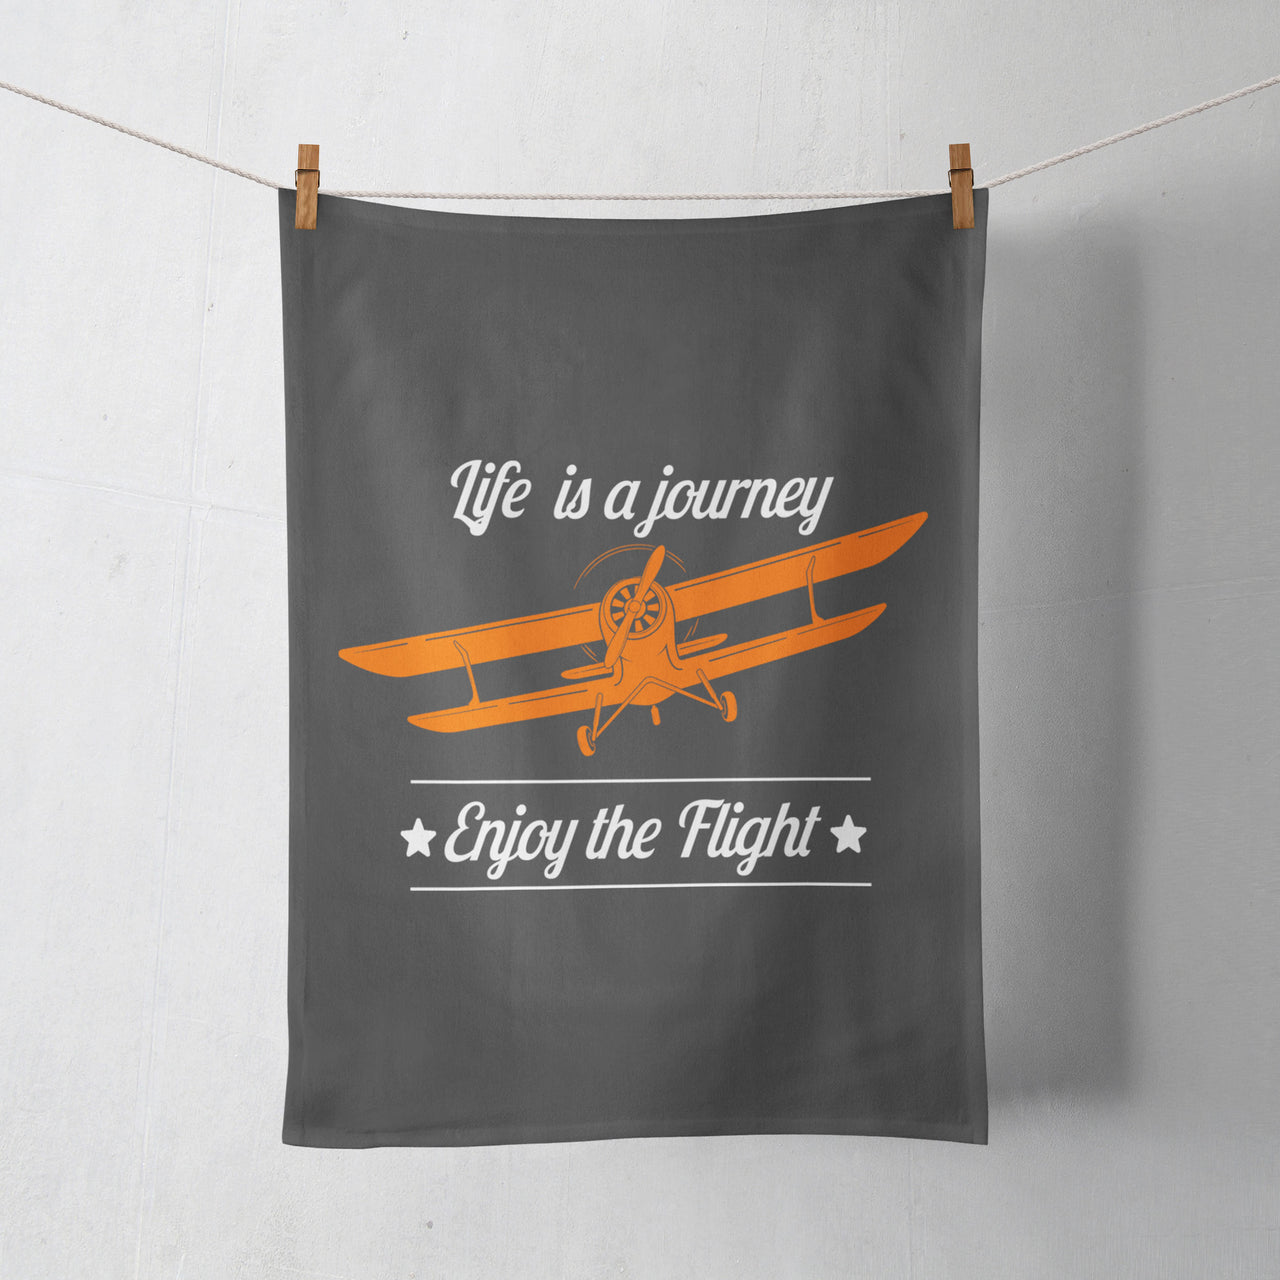 Life is a journey Enjoy the Flight Designed Towels